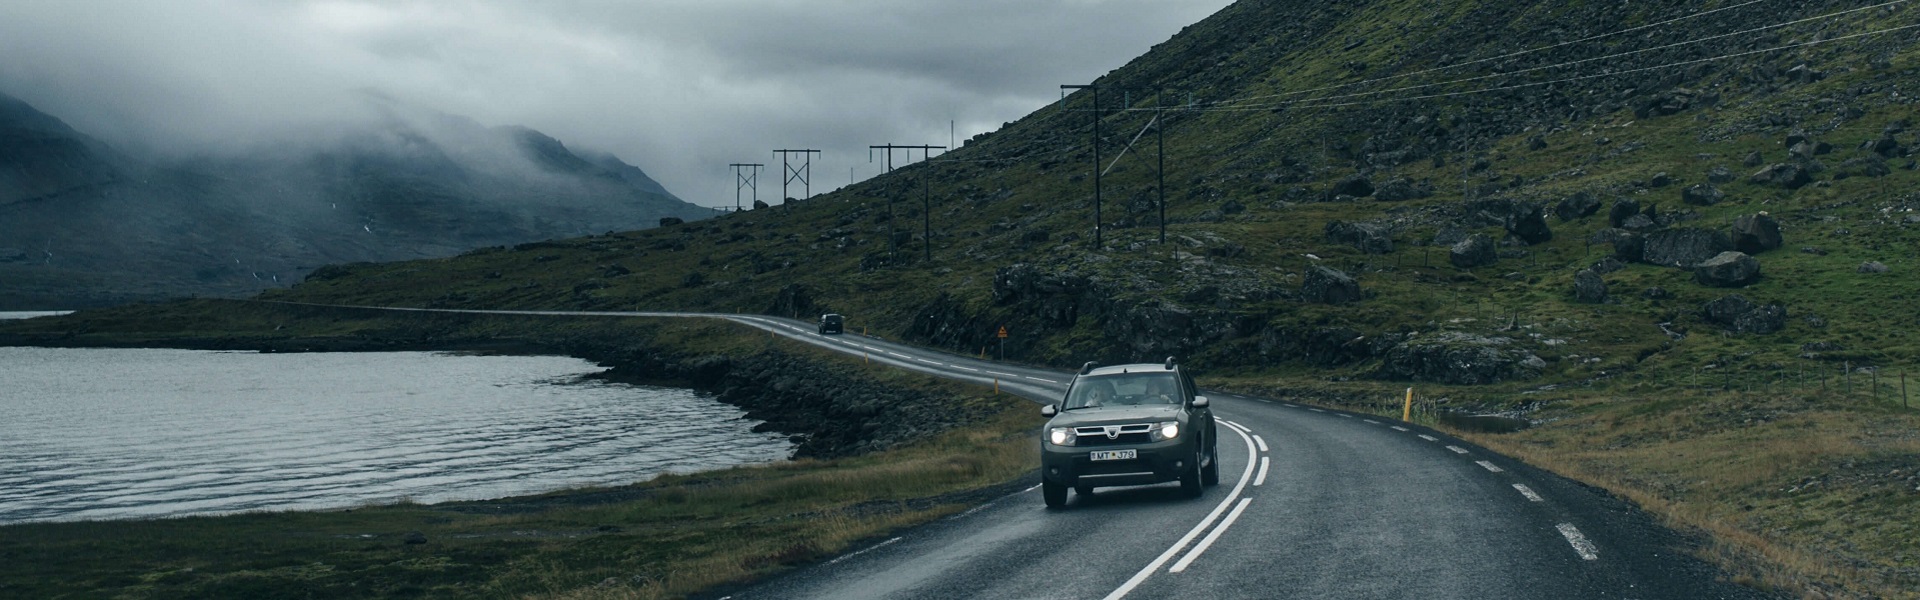 Otkup akumulatora Ecomet | Renault Dacia delovi